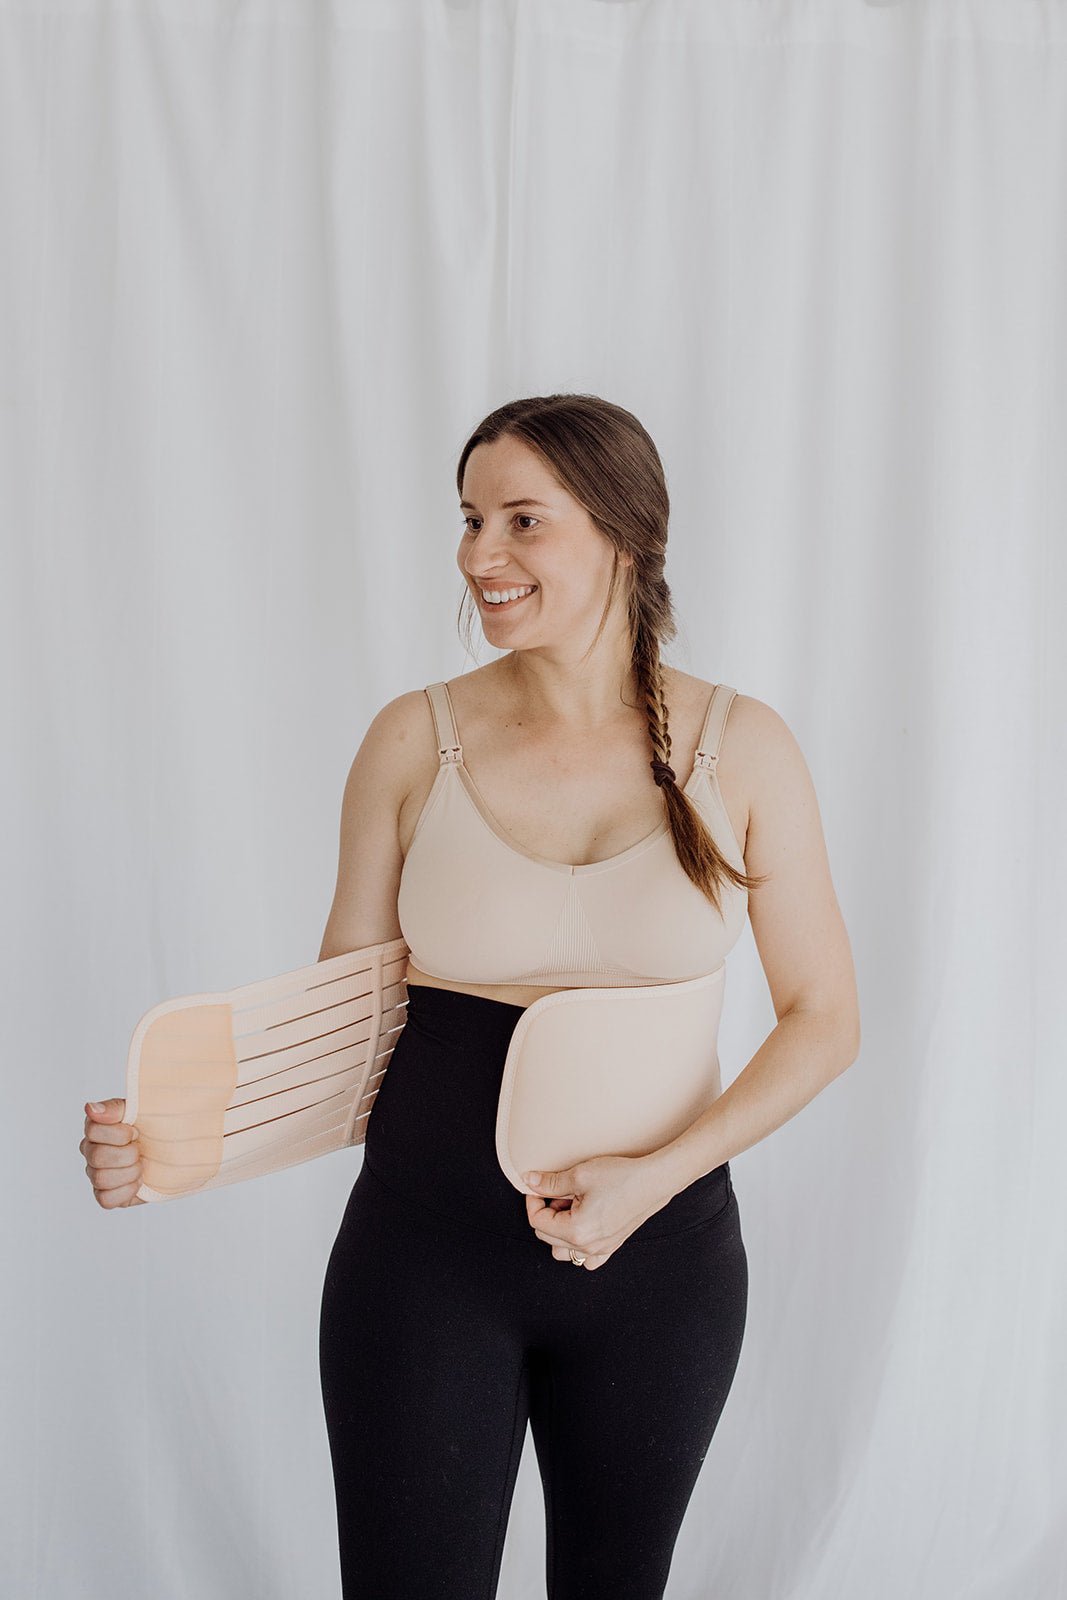 Postpartum Compression Garments for New Moms